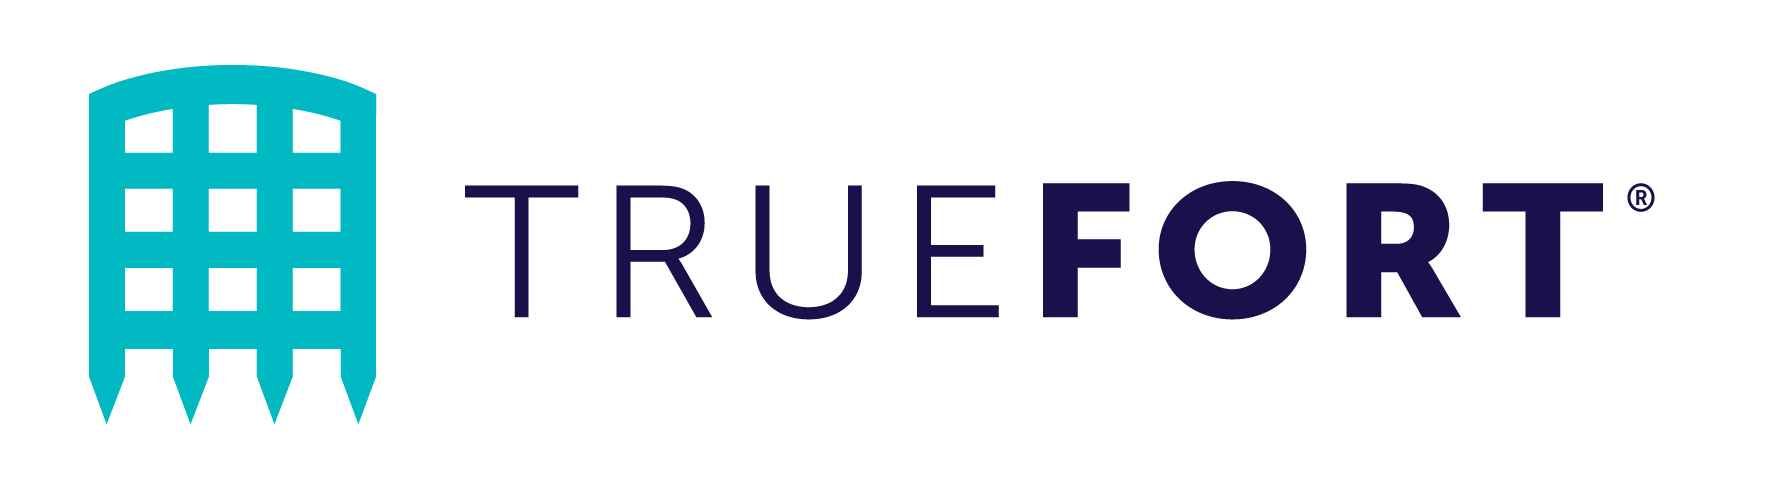 TrueFort deep violet horizontal logo with turquoise emblem